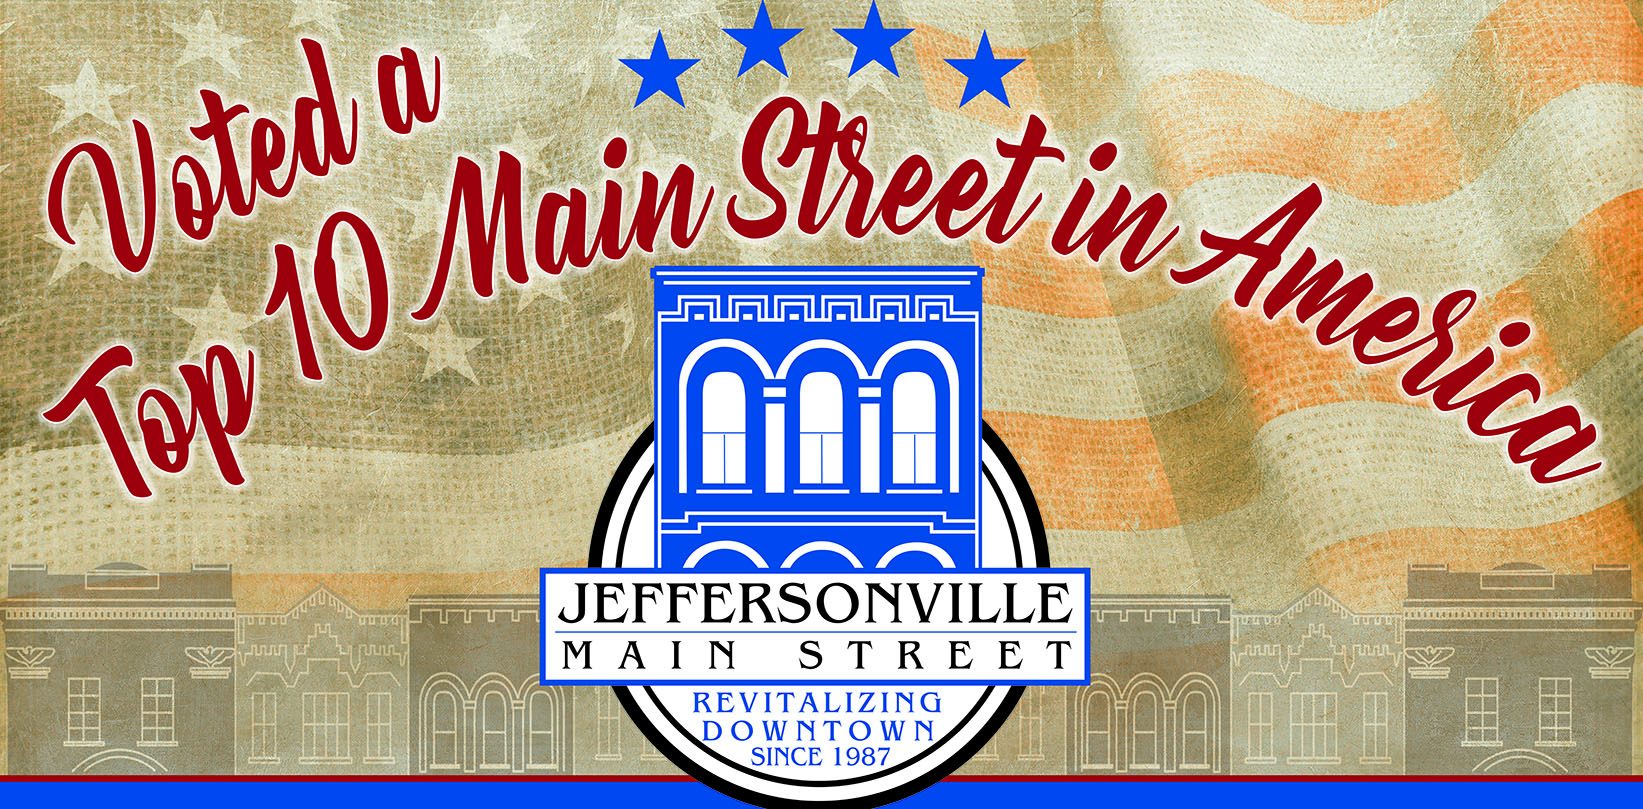 RiverStage Concert Jeffersonville Main Street, Inc.